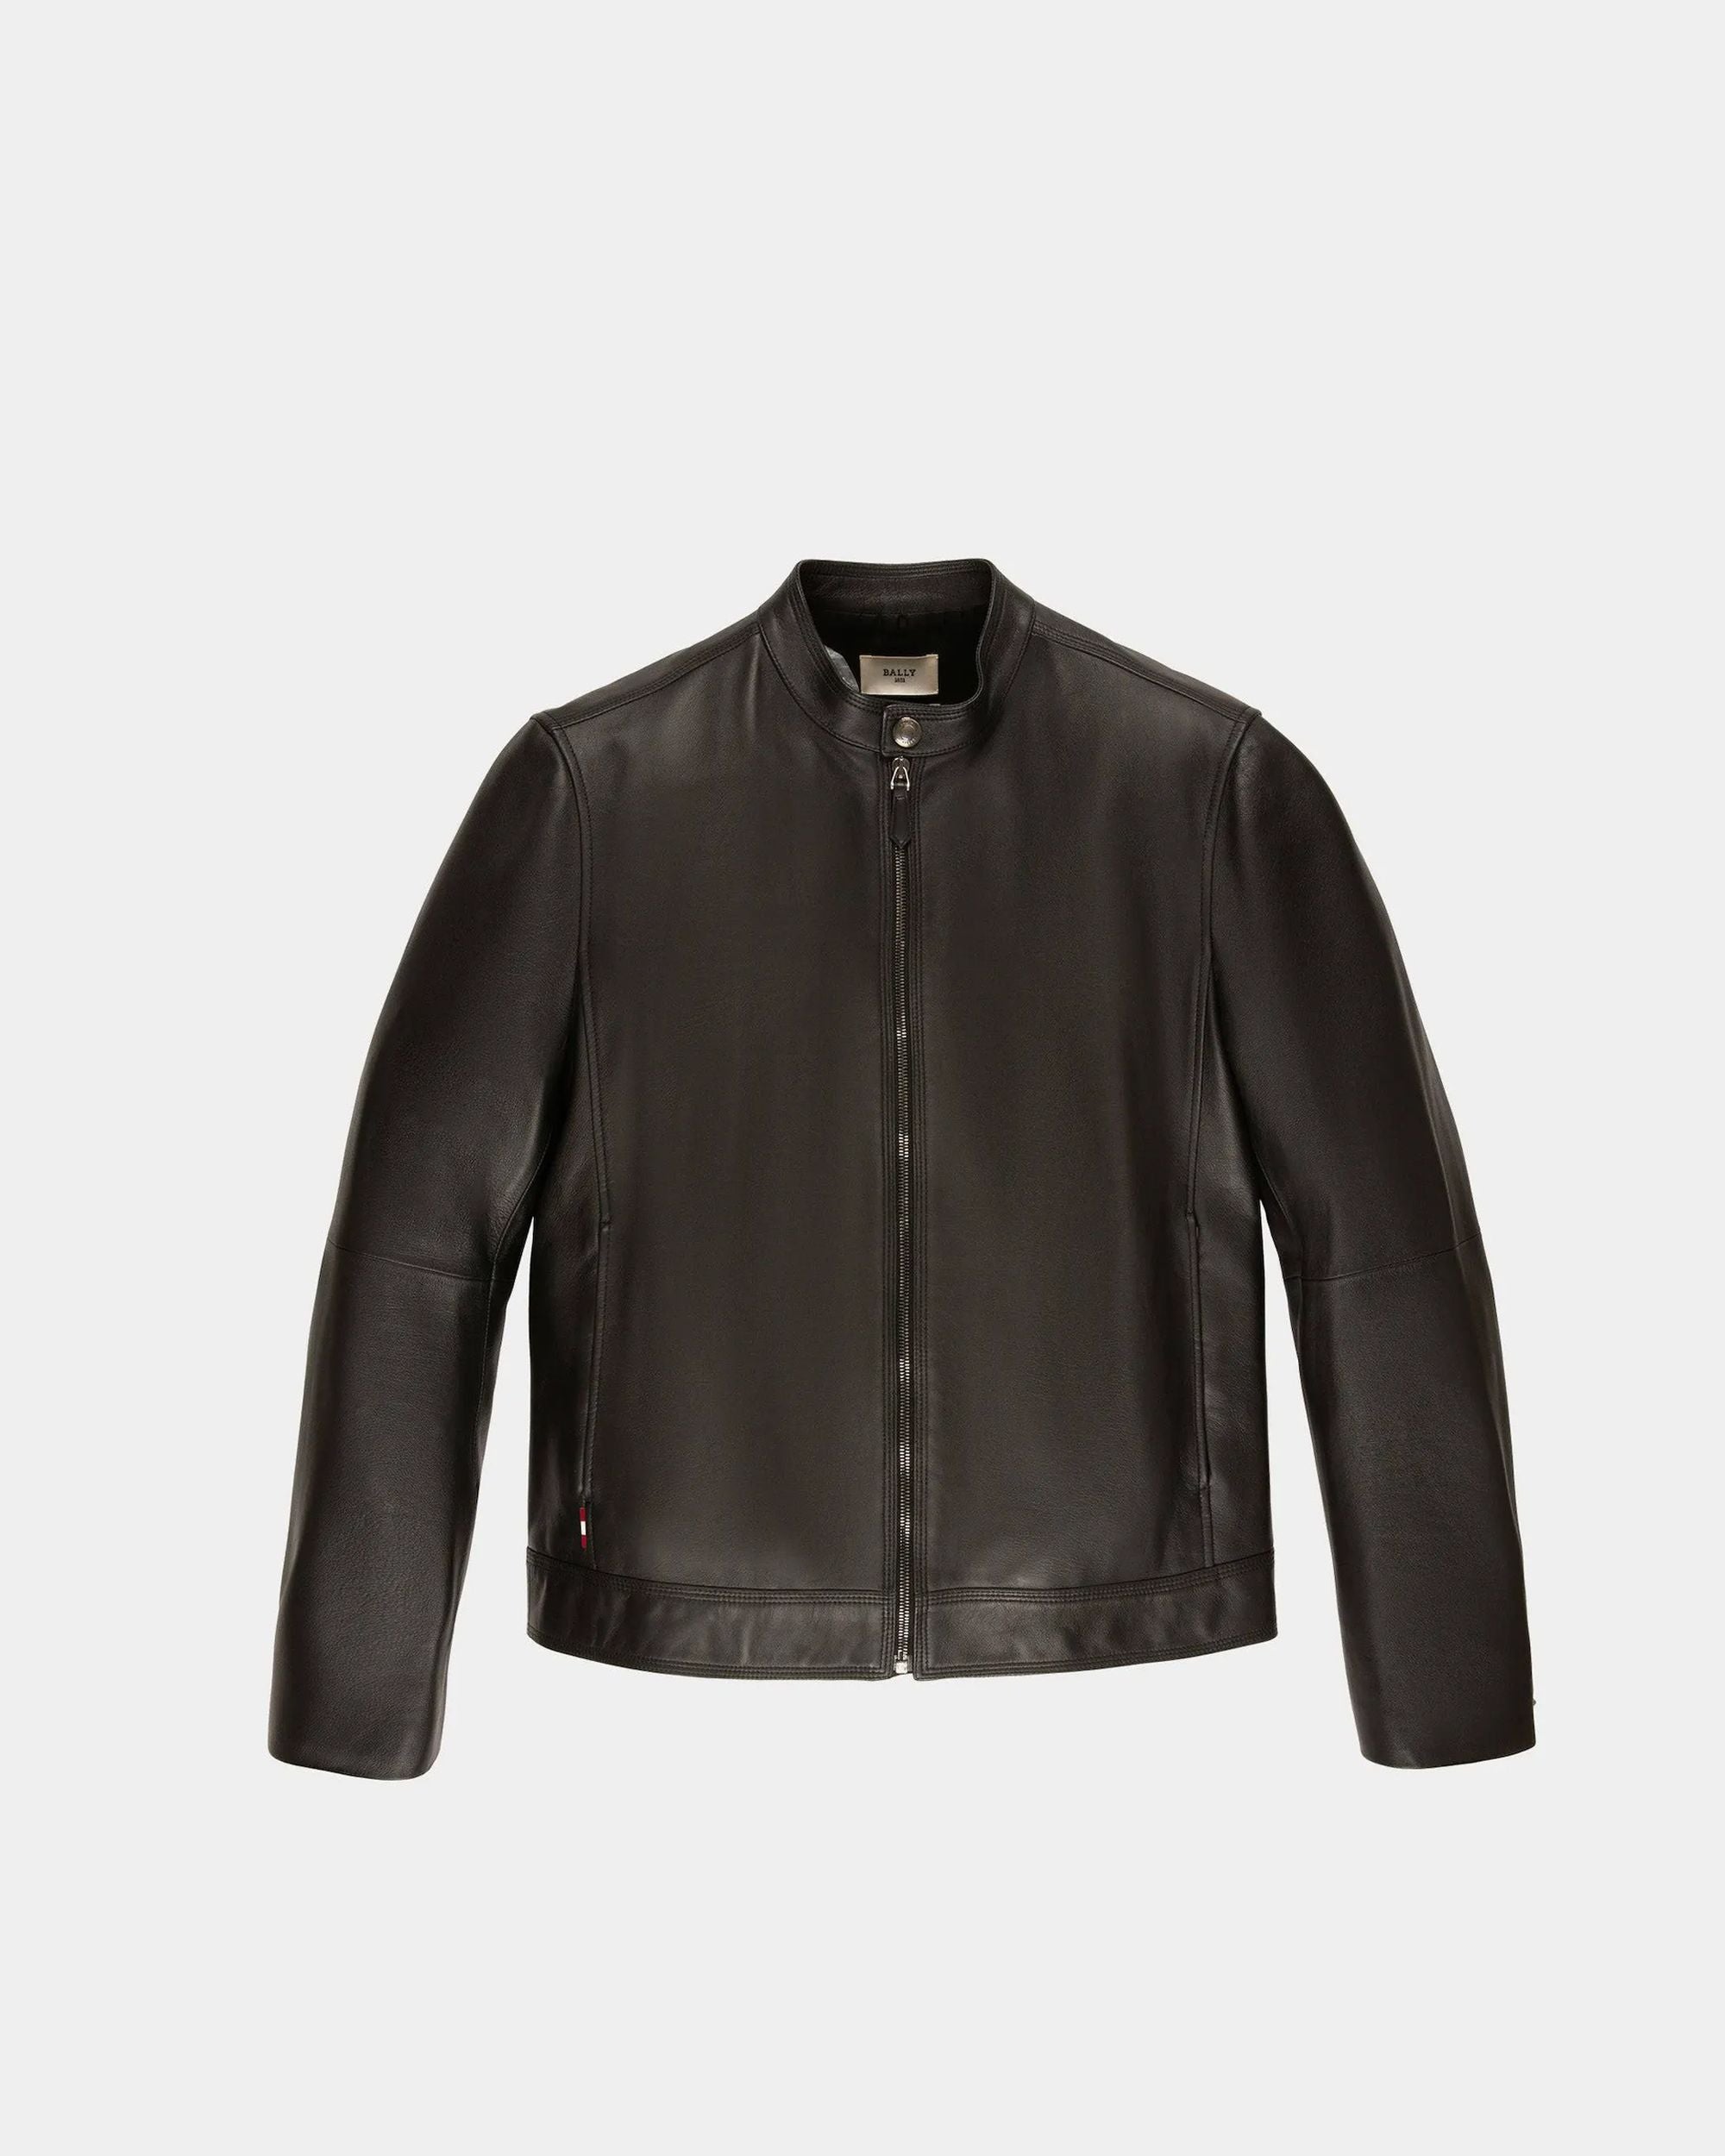 High Neck Blouson | Men\'s Outerwear | Black Leather | Bally